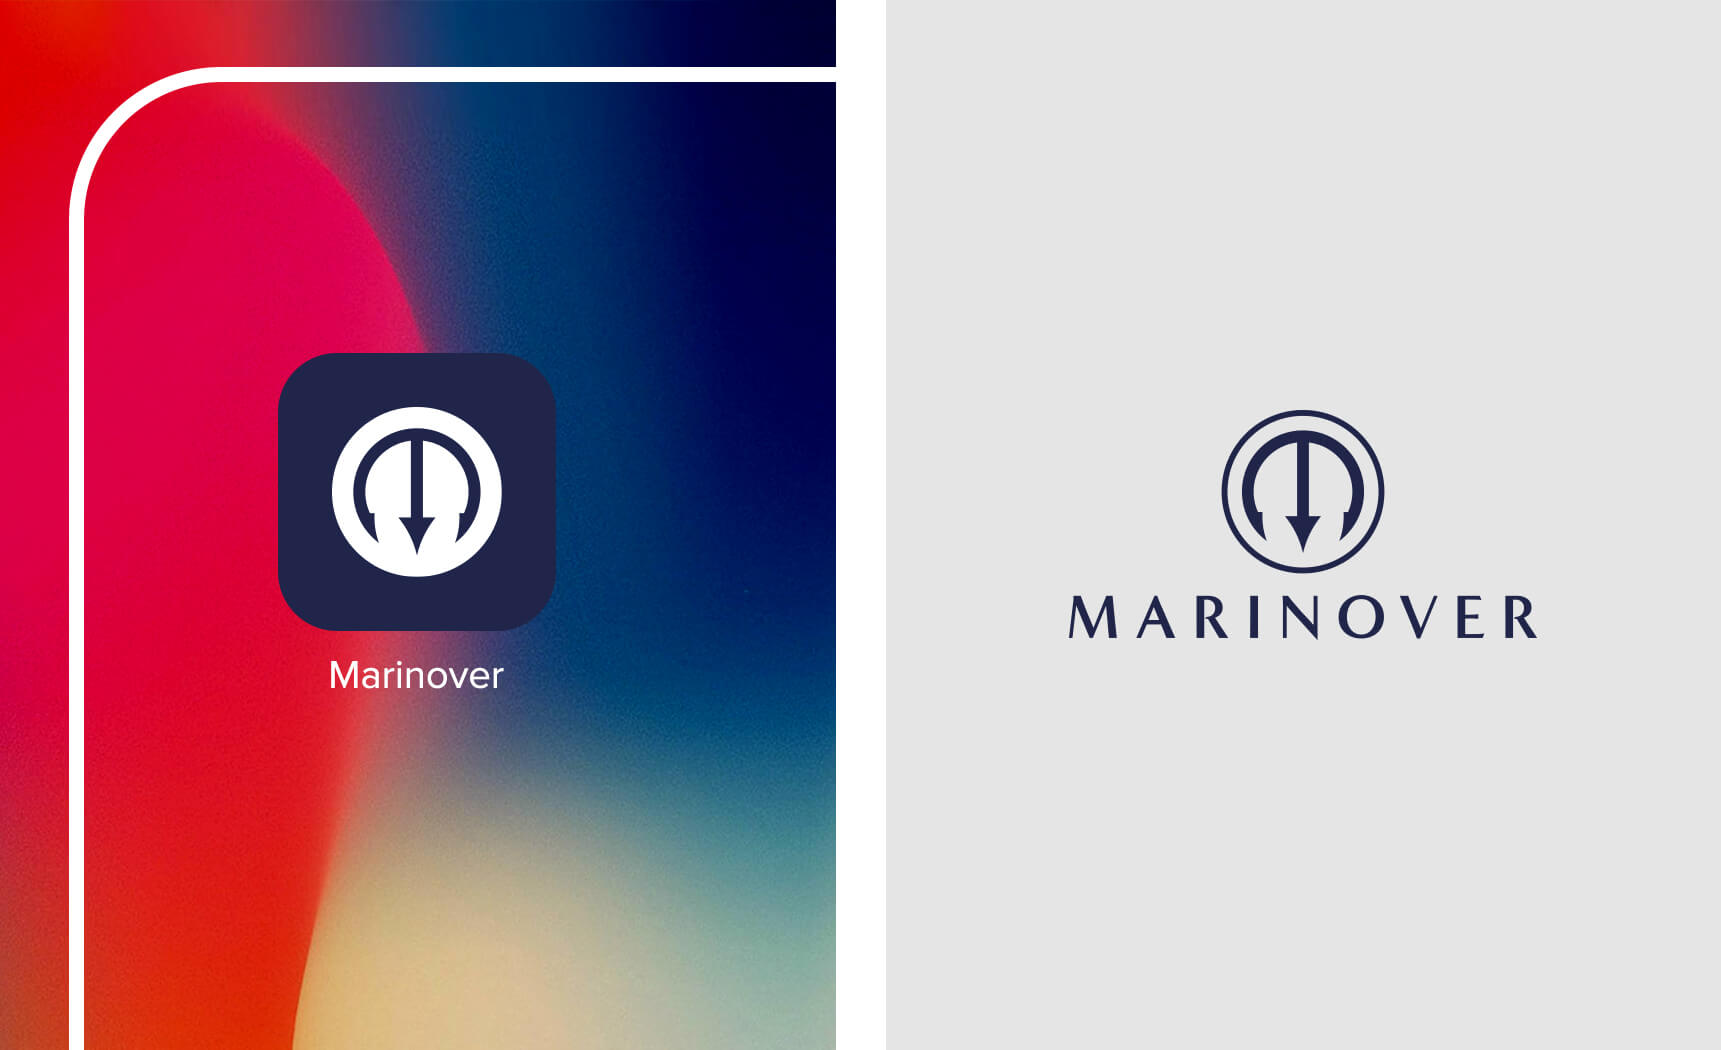 Marinover-2 - wrinting 1-3 - logo animasyon-5 - logo-ilham-6- logo size-7 - app-logo